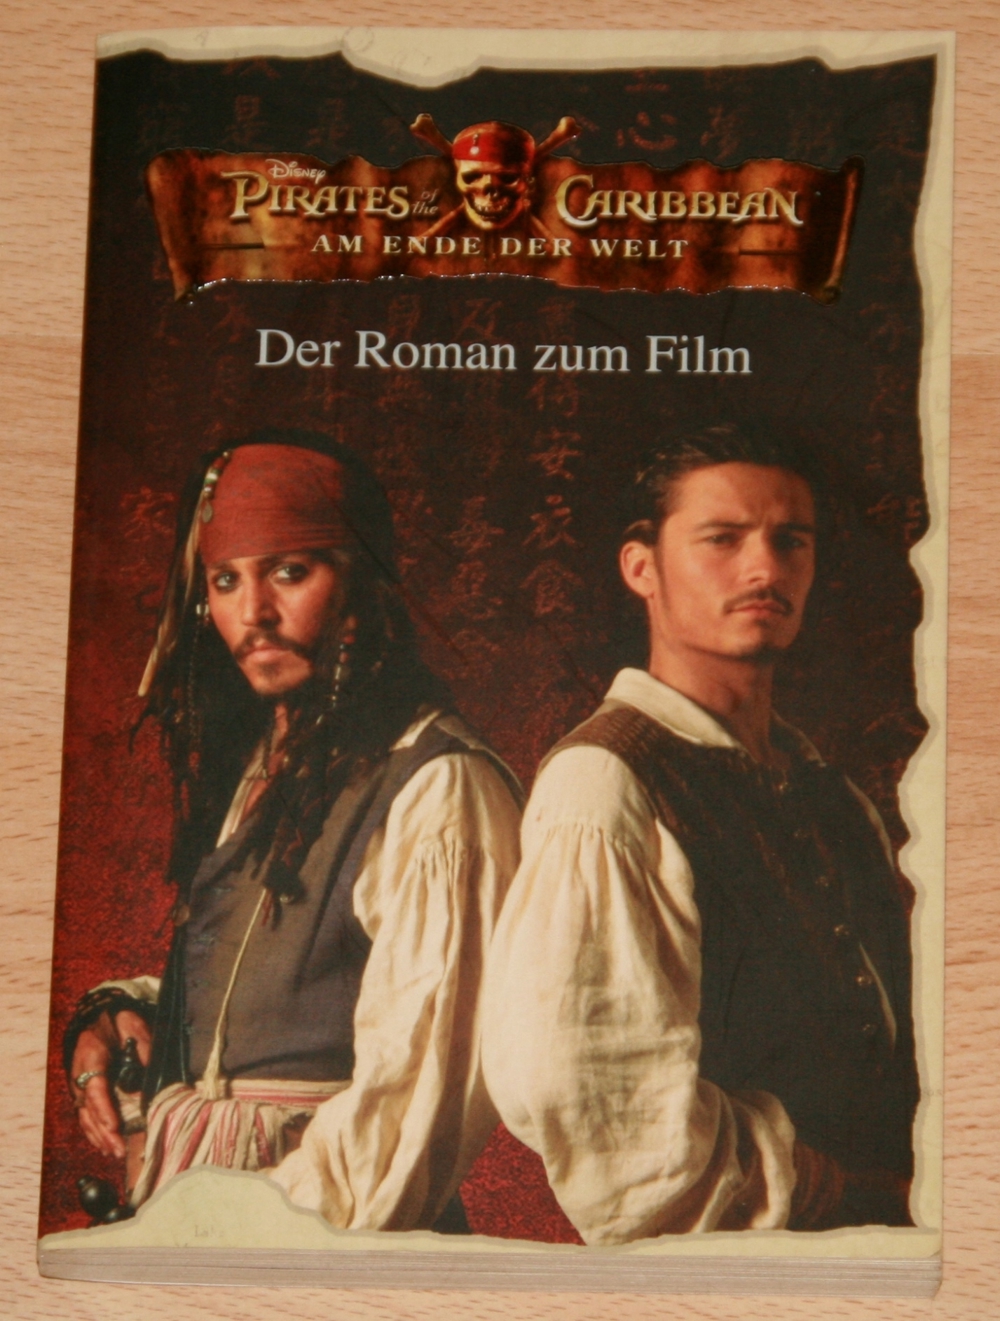 Buch - "Pirates of the Caribbean - Am Ende der Welt"